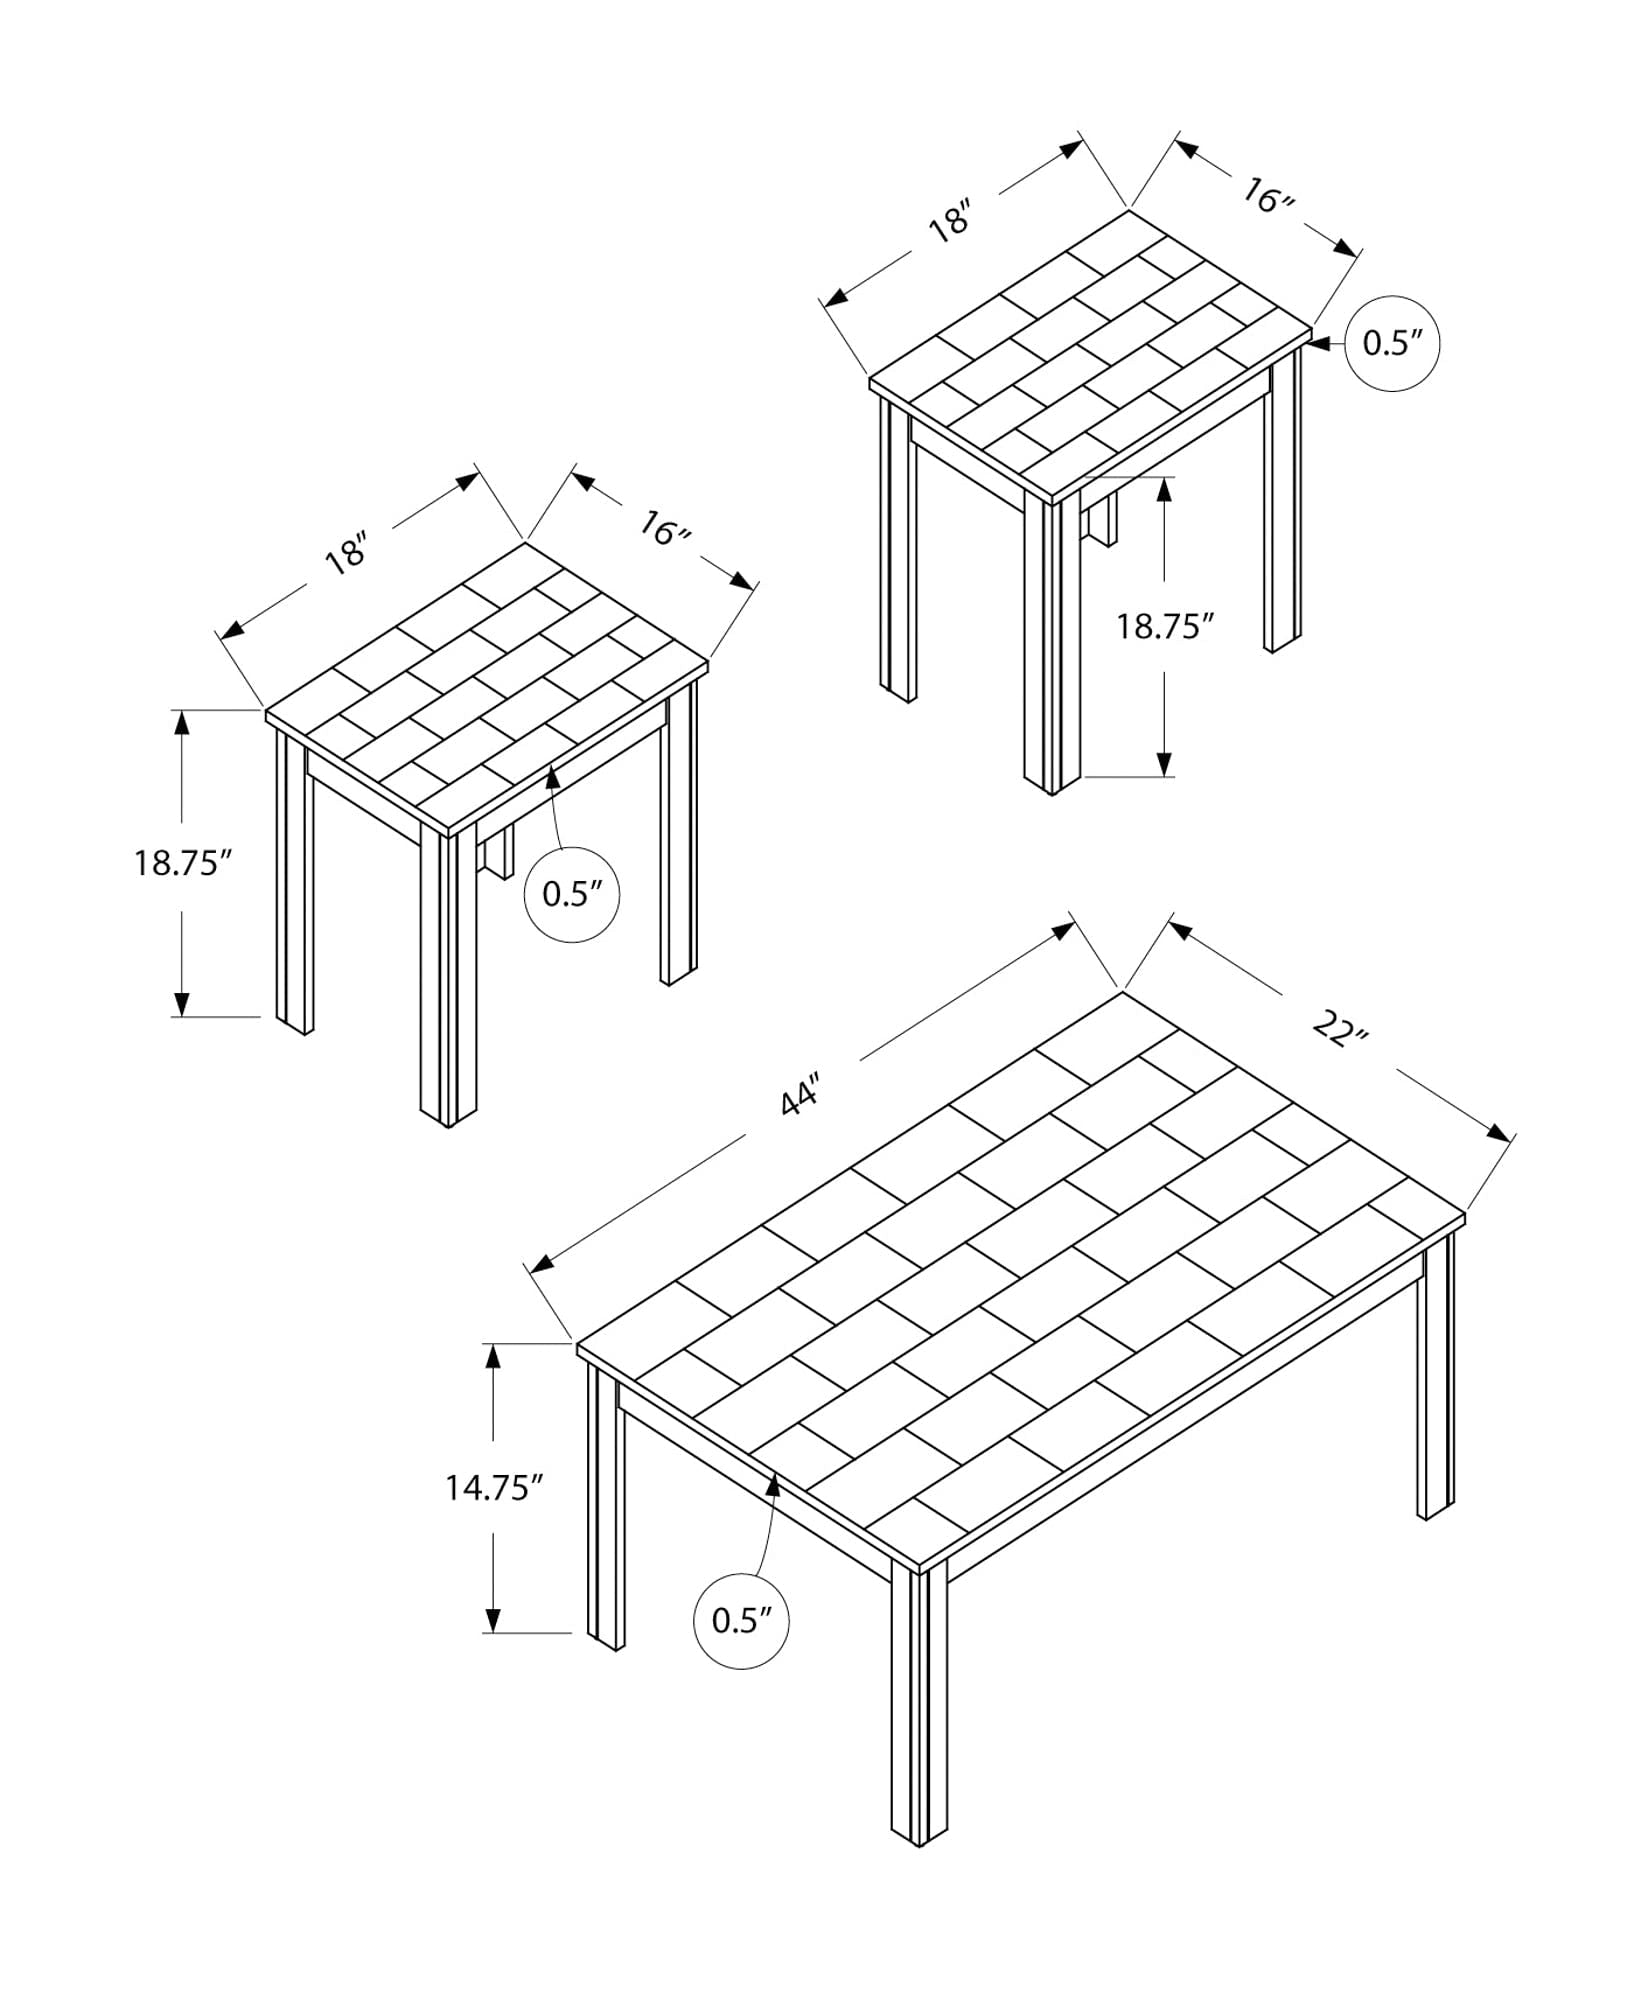 Table Set - 3Pcs Set / Black / Grey Marble-Look Top